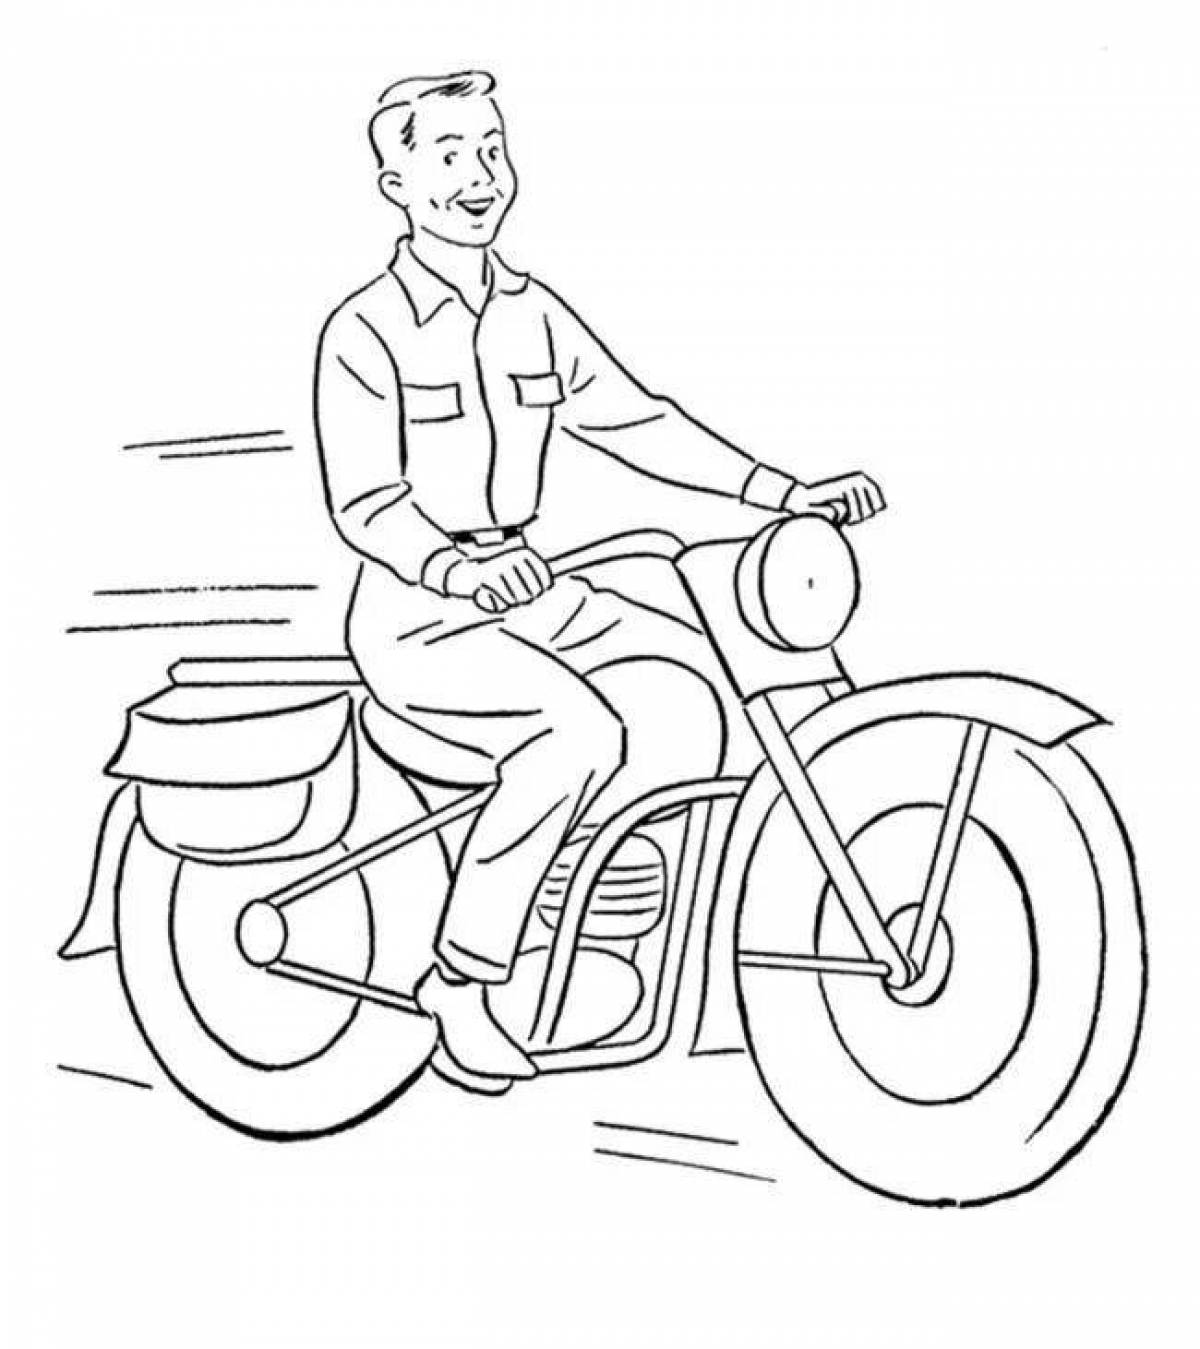 Rebel motorcyclist coloring page